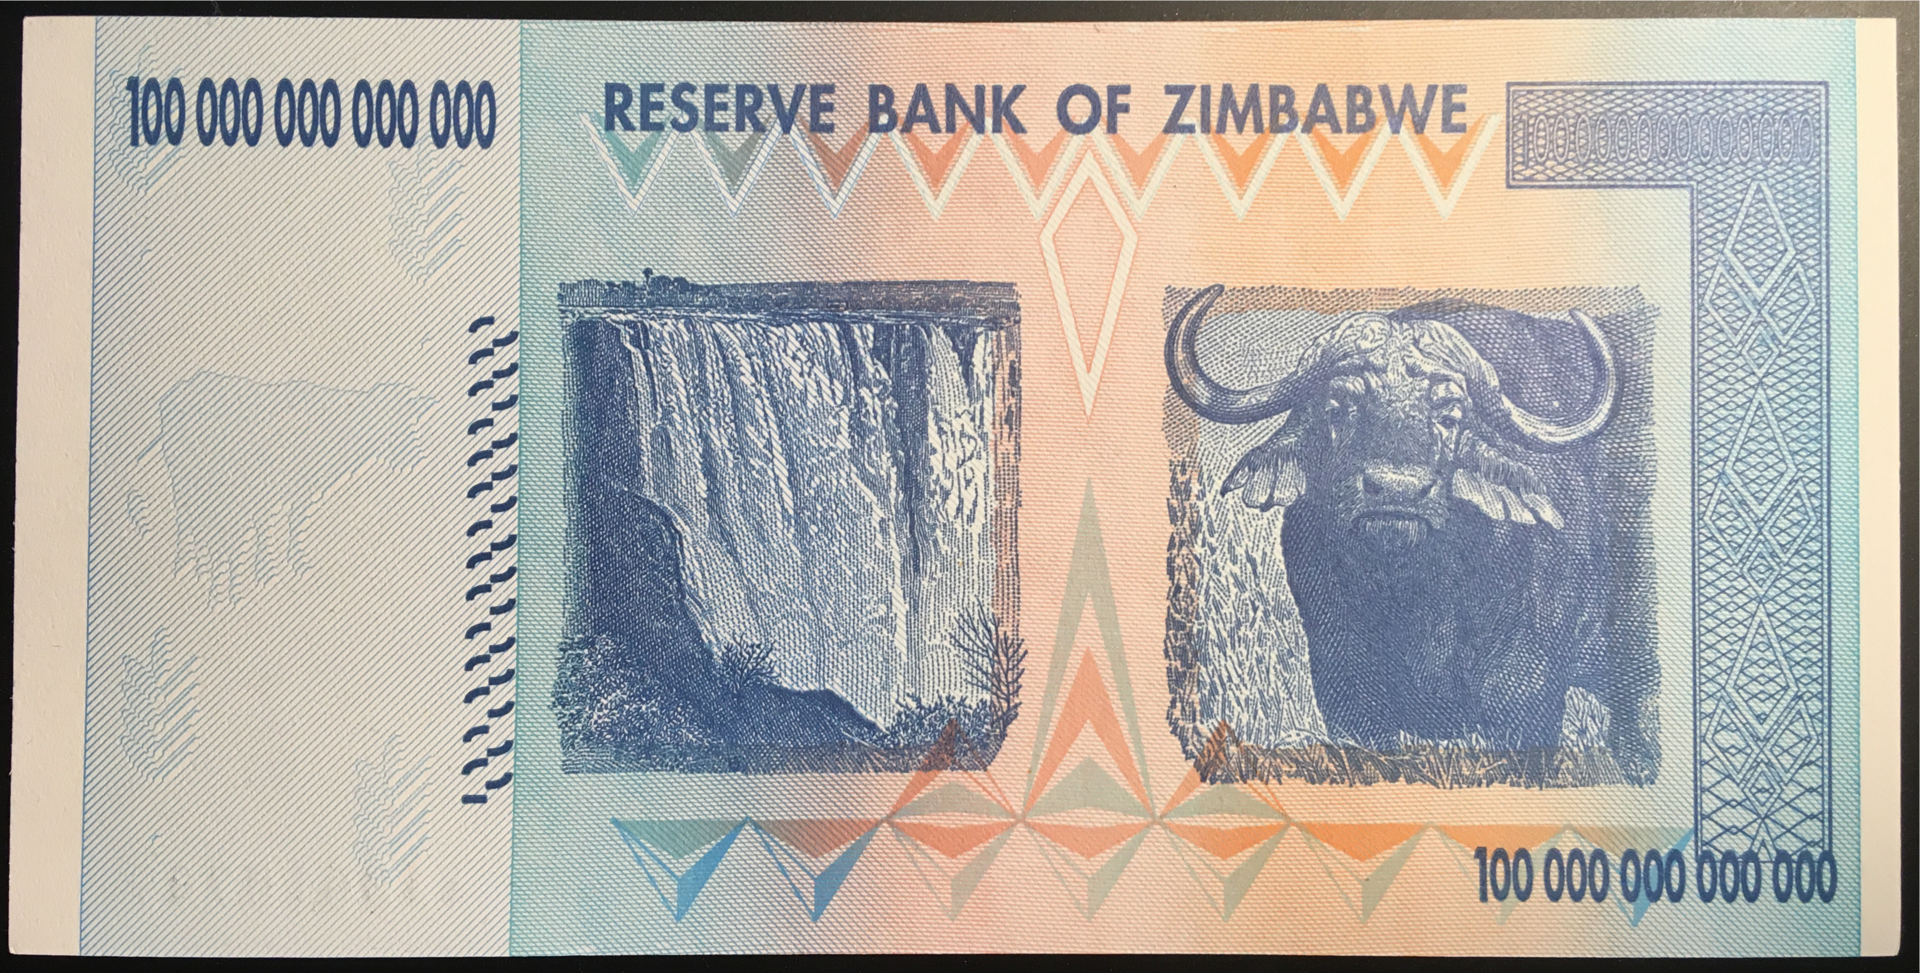 Zimbabwe02.png